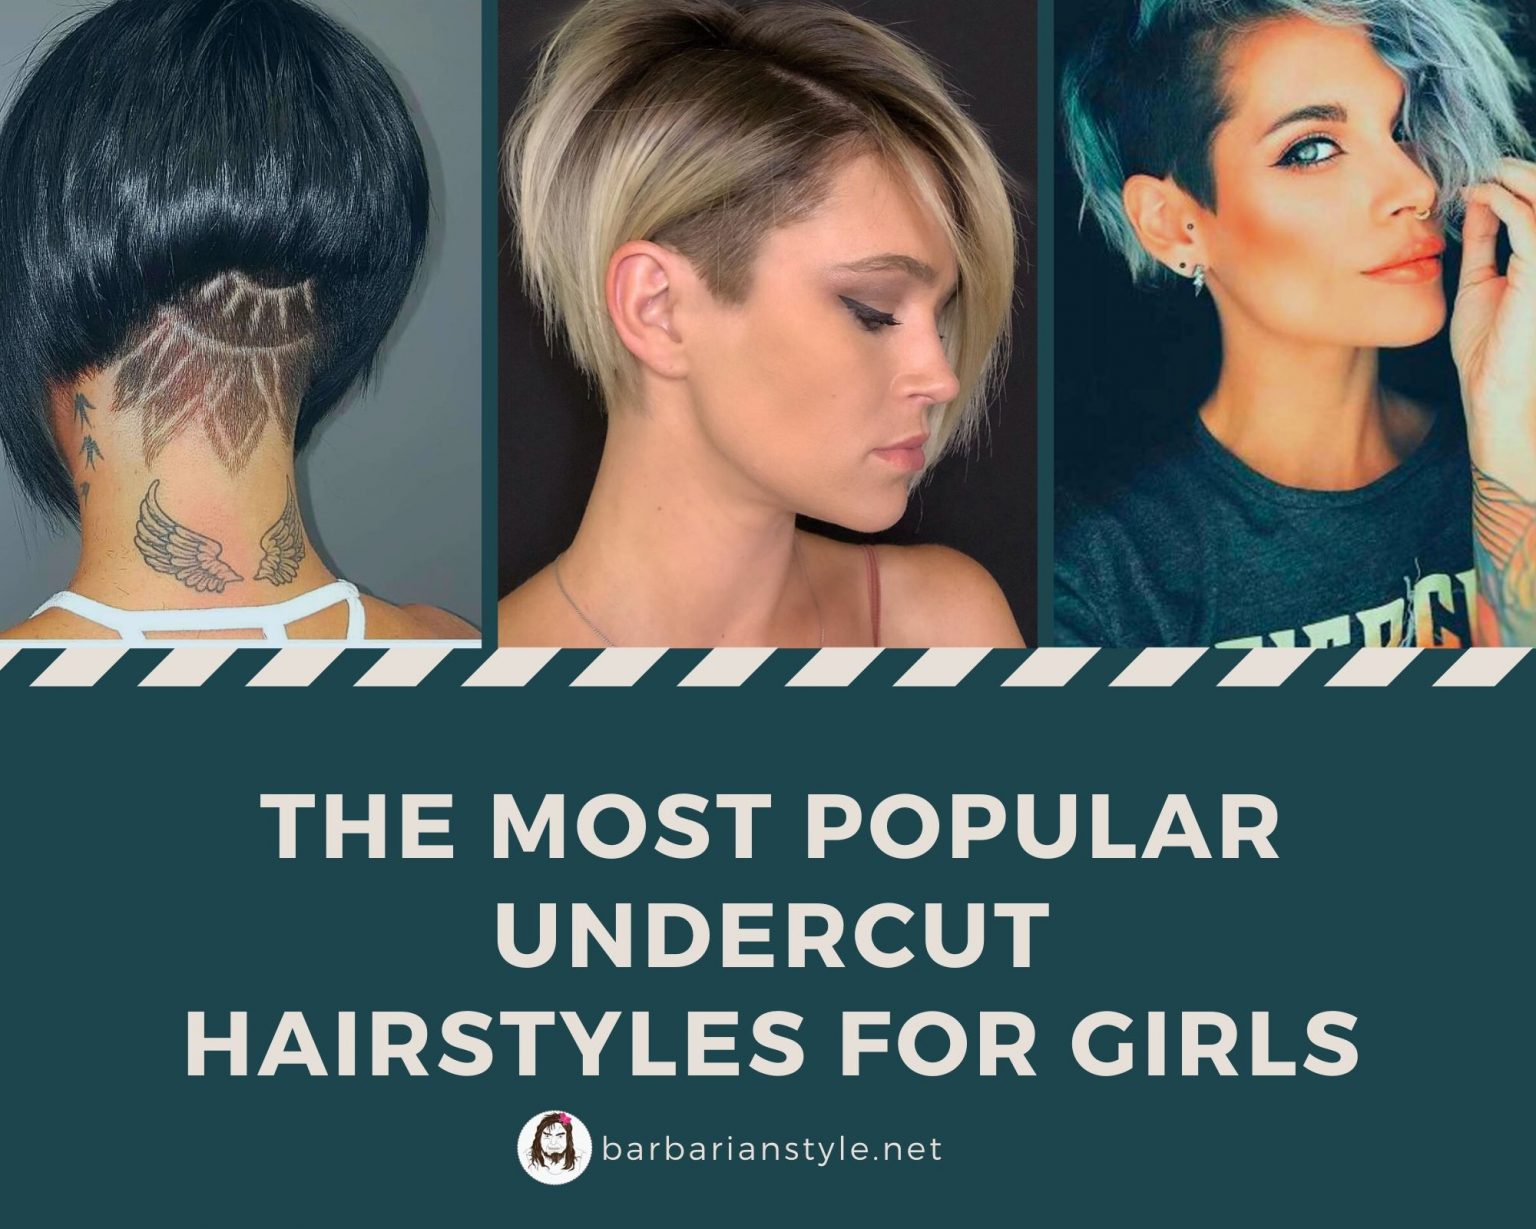 5. "Blonde Undercut Hair Inspiration for Girls" - wide 1